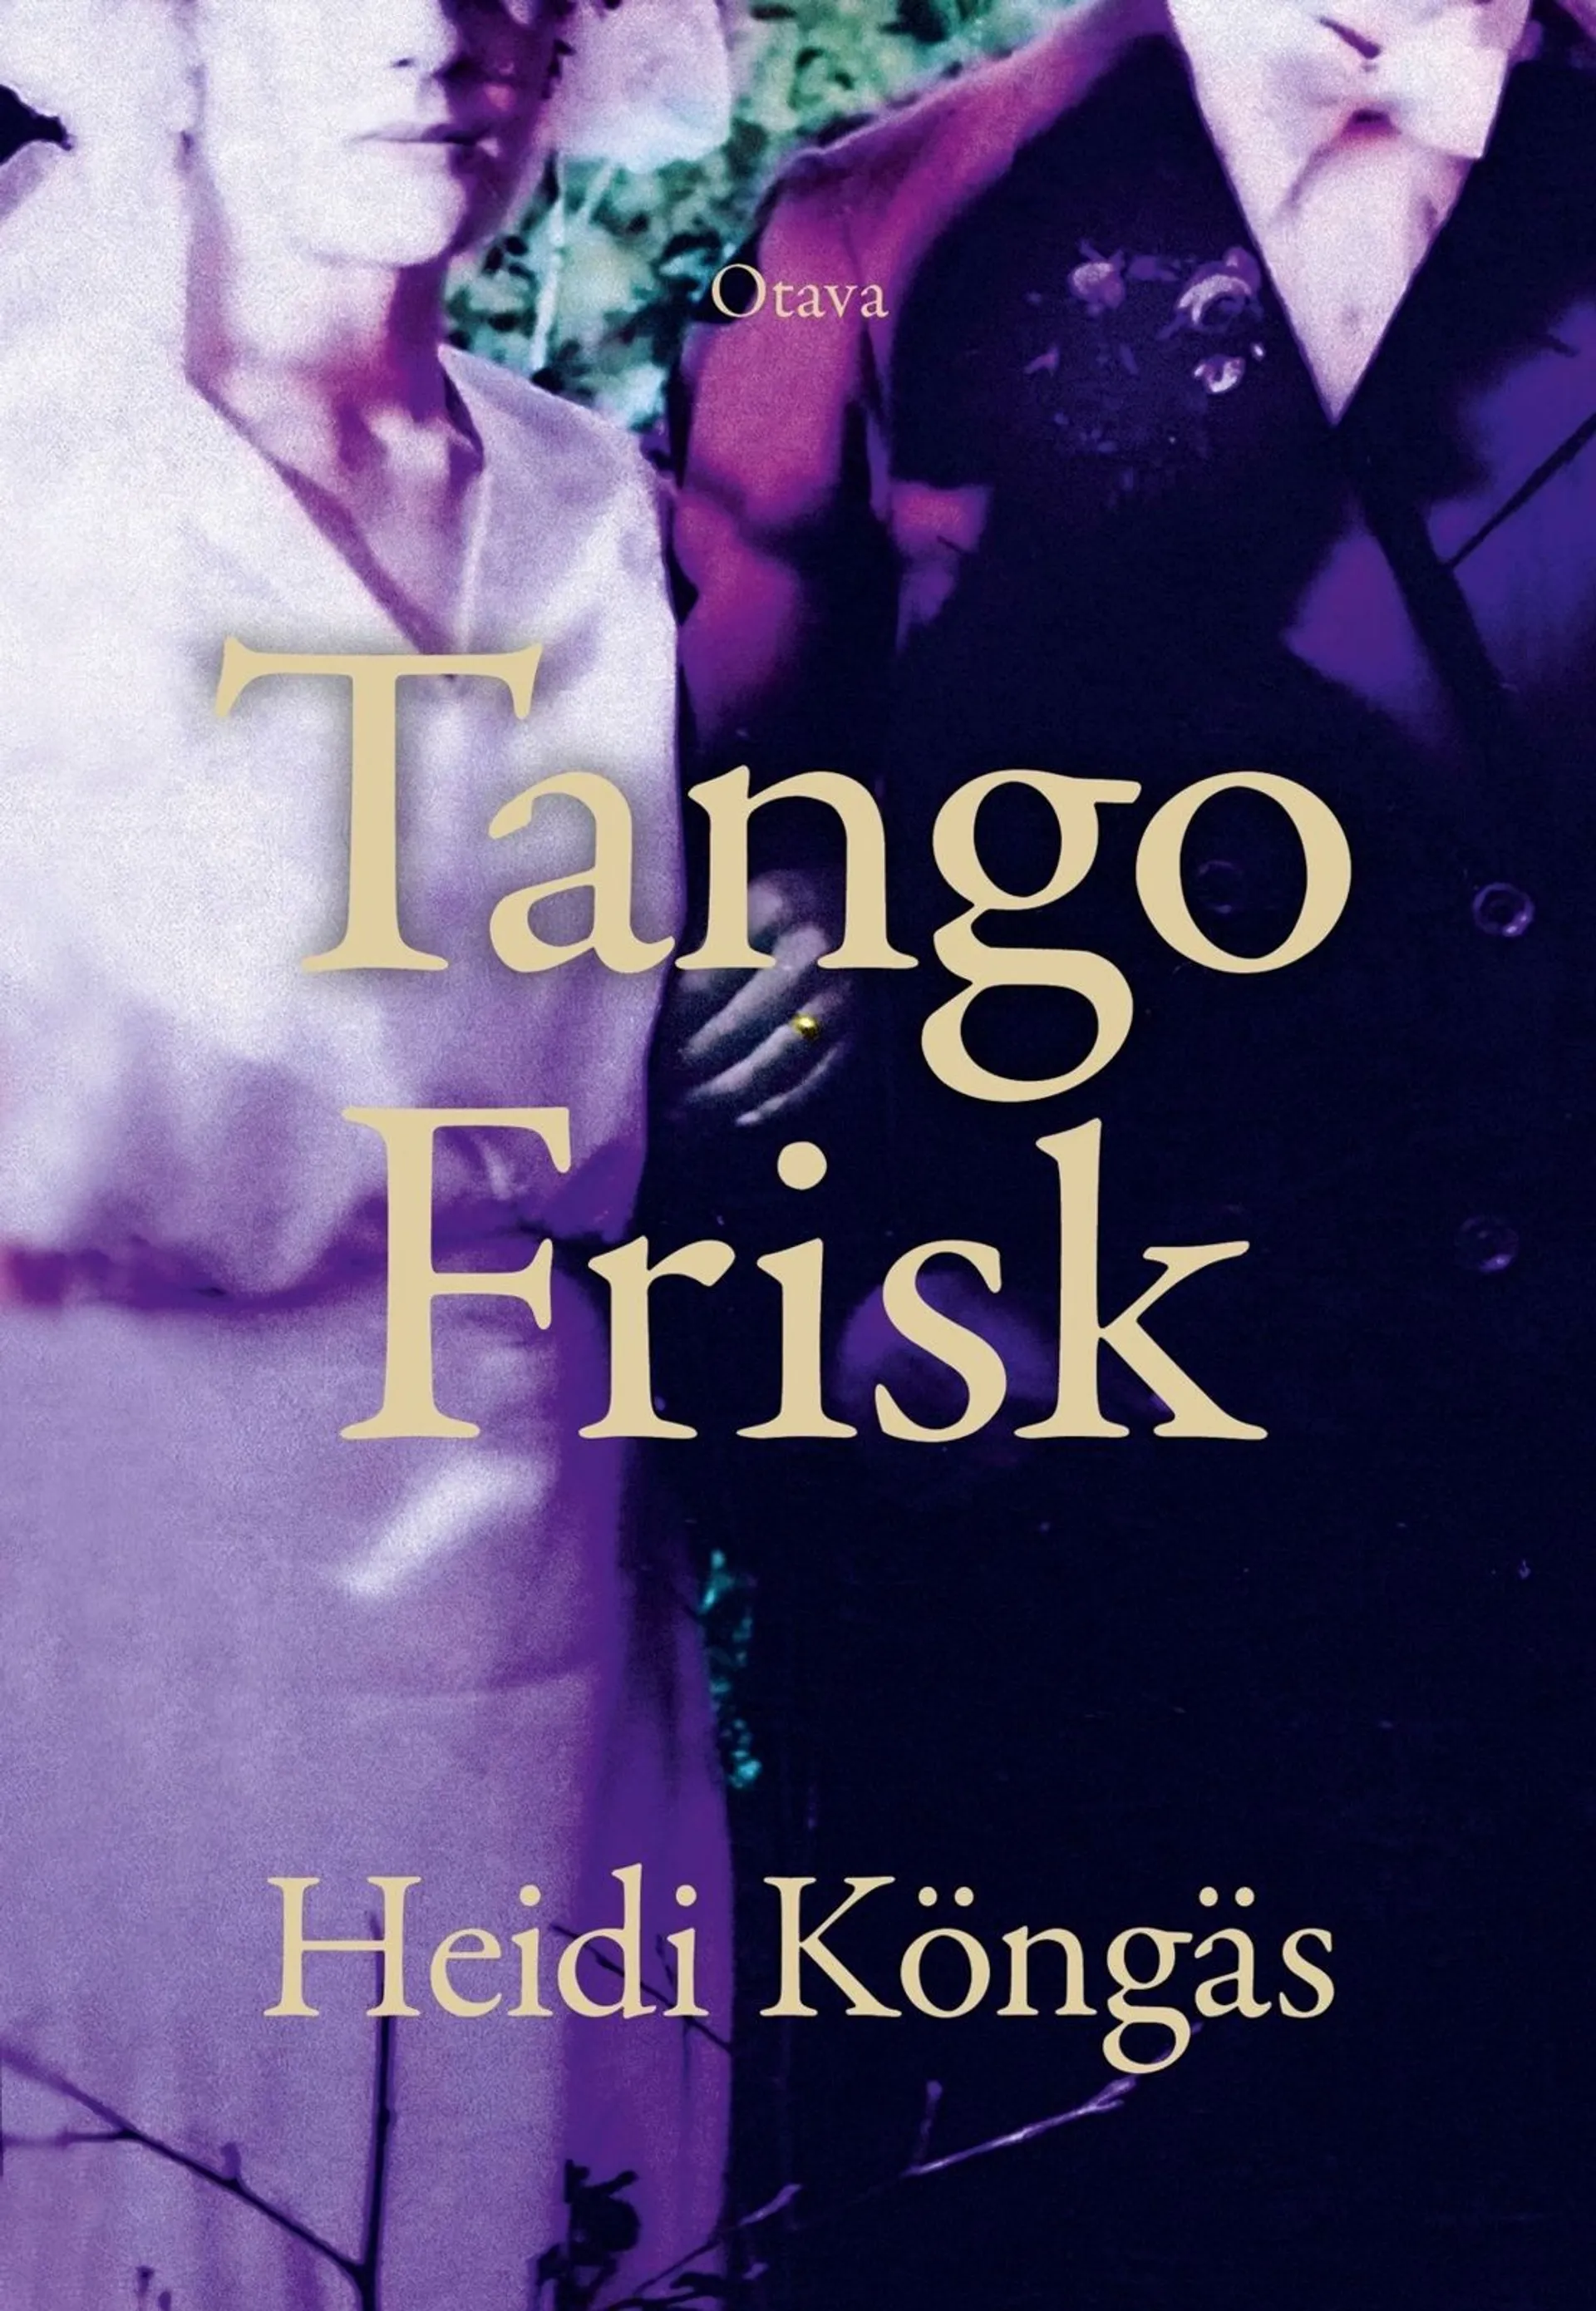 Köngäs, Tango Frisk